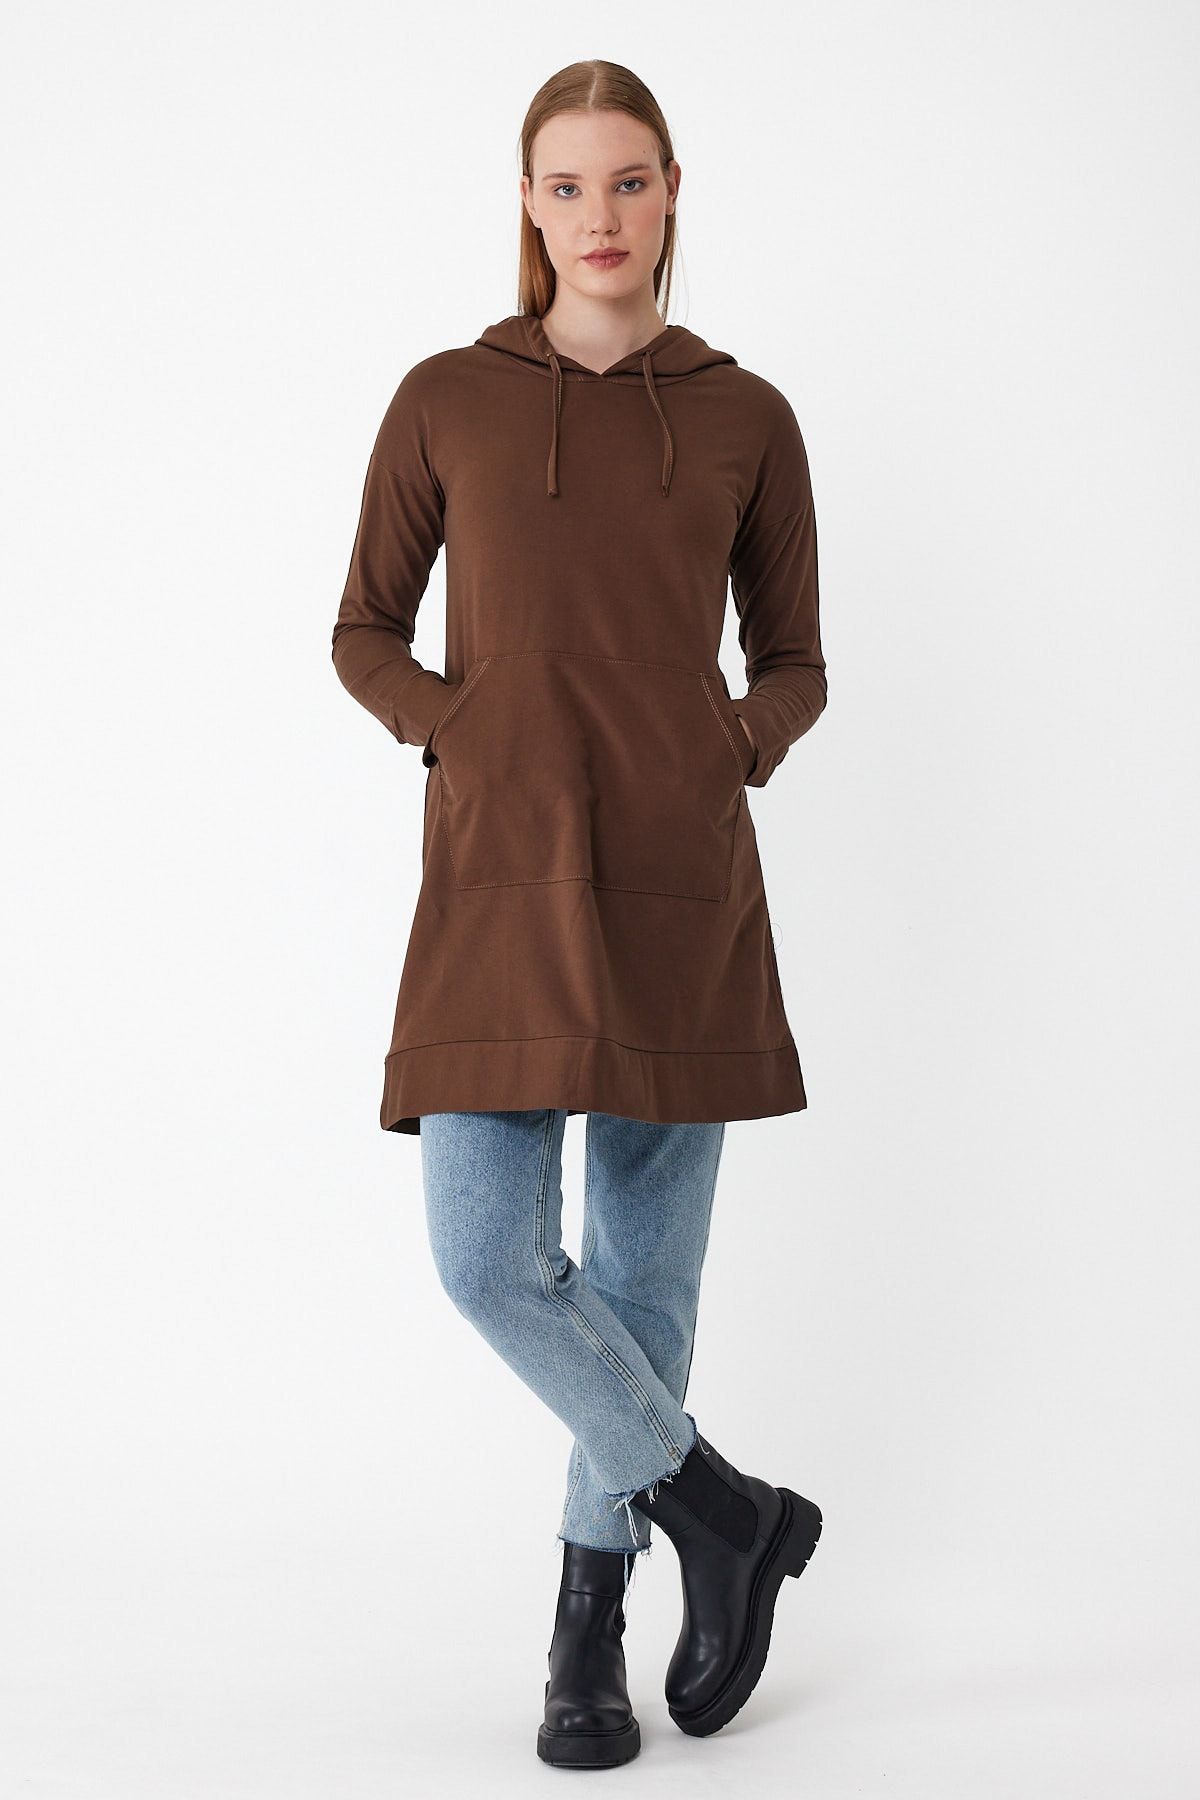 Gippe Collection Kahverengi Kapşonlu Yaka Basic Örme Sweatshirt 10383